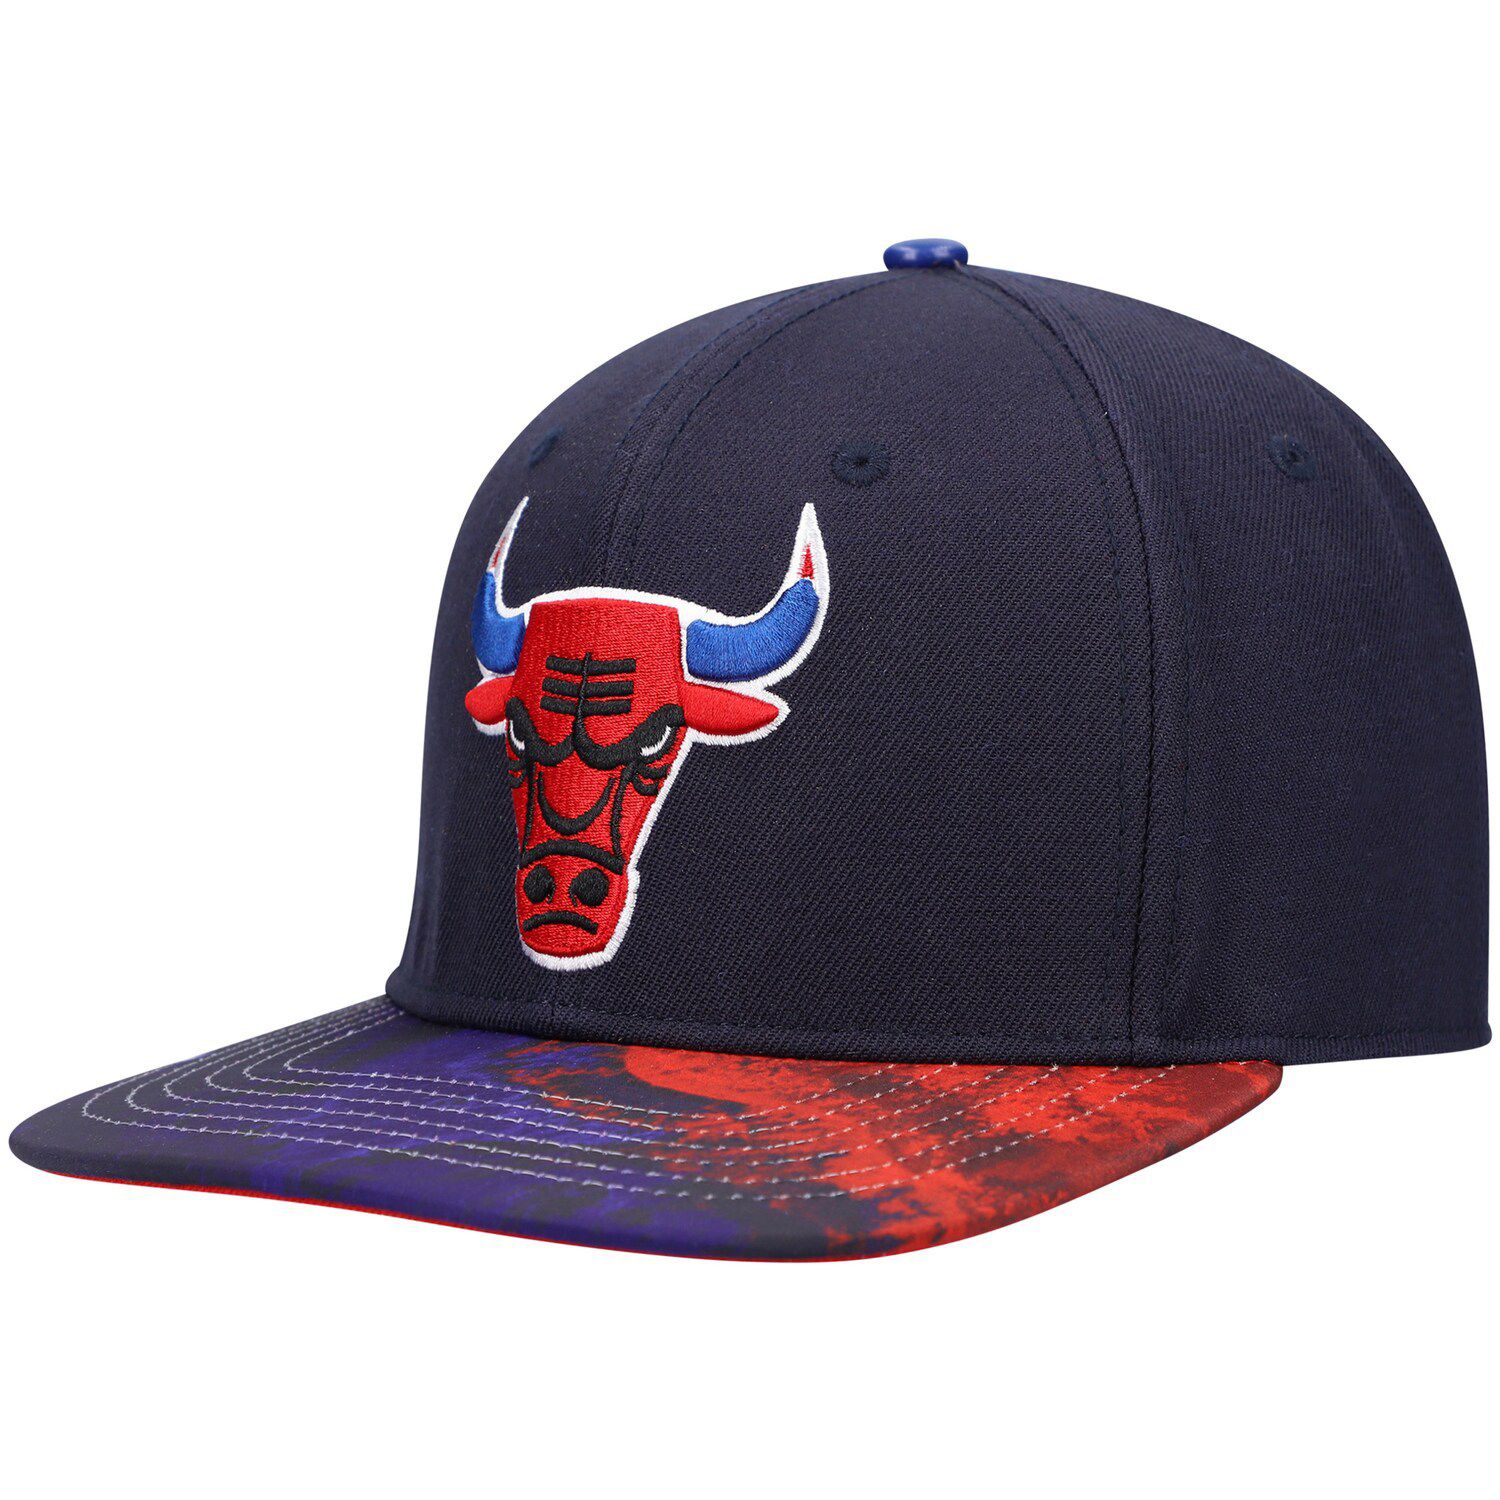 Image for Unbranded Men's Pro Standard Navy Chicago Bulls Americana Dip-Dye Snapback Hat at Kohl's.